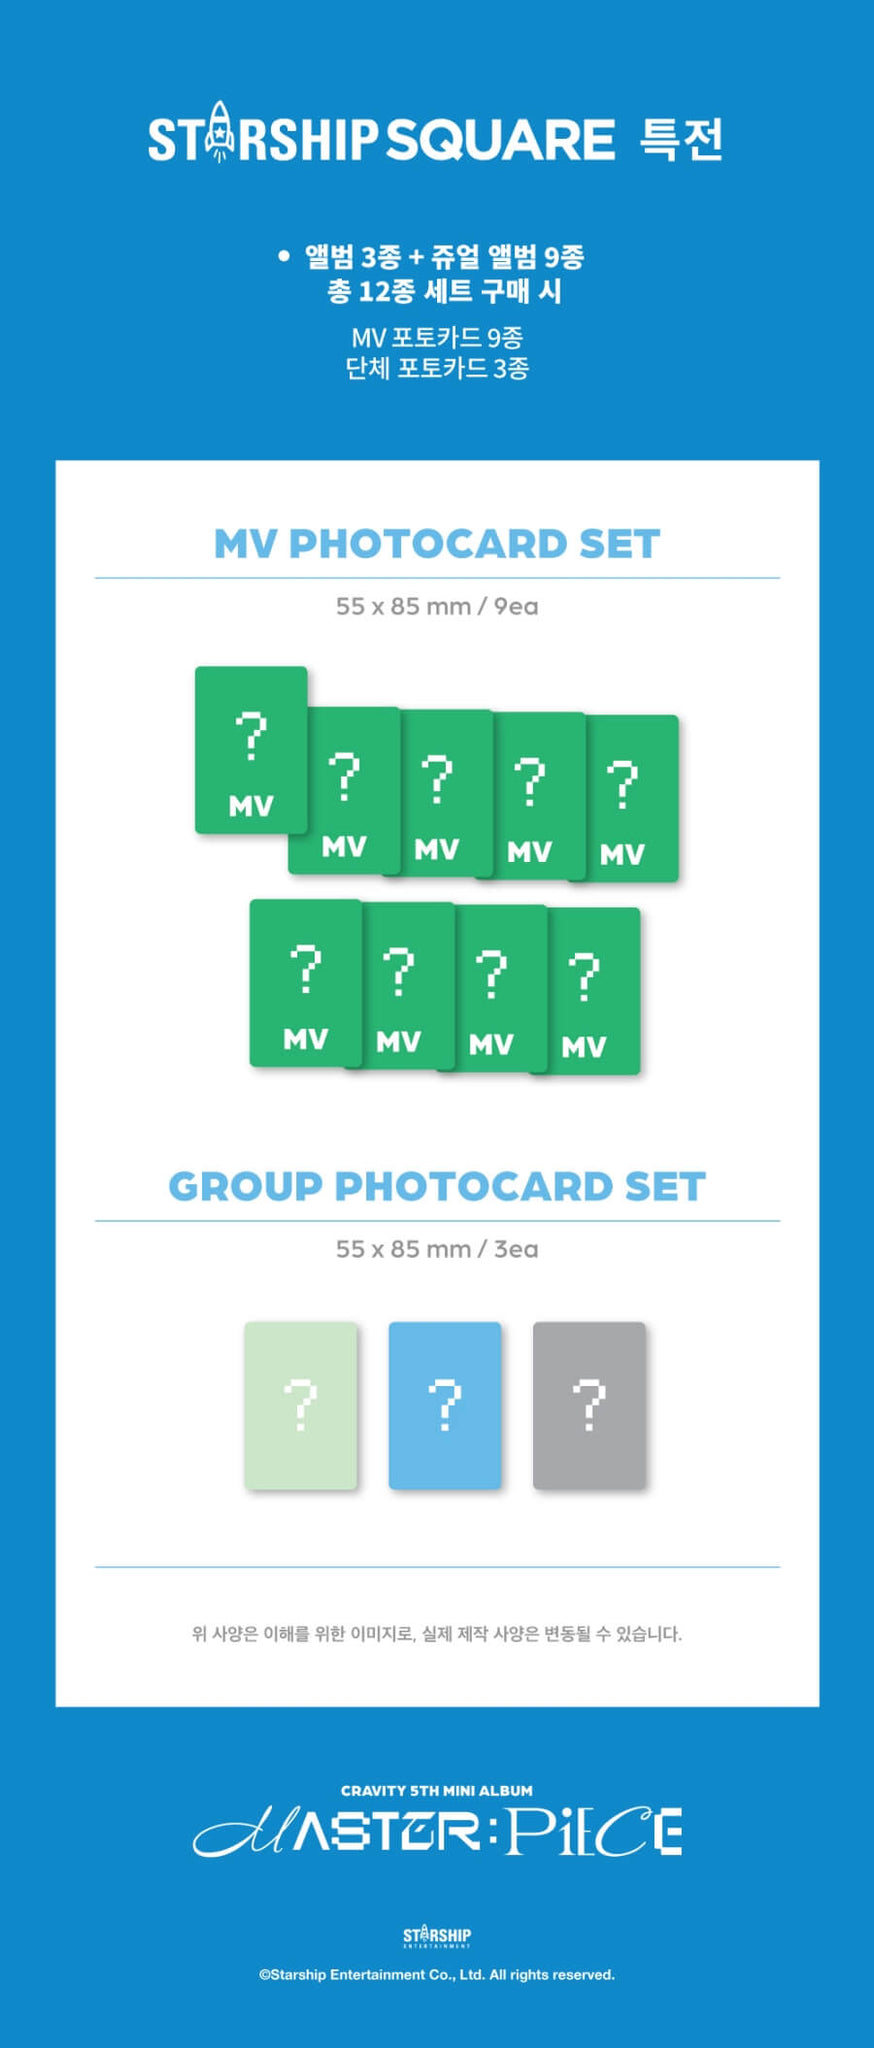 CRAVITY 5th Mini Album MASTER:PIECE - Jewel Version Inclusions Starship Square Benefit MV Photocard Set Group Photocard Set